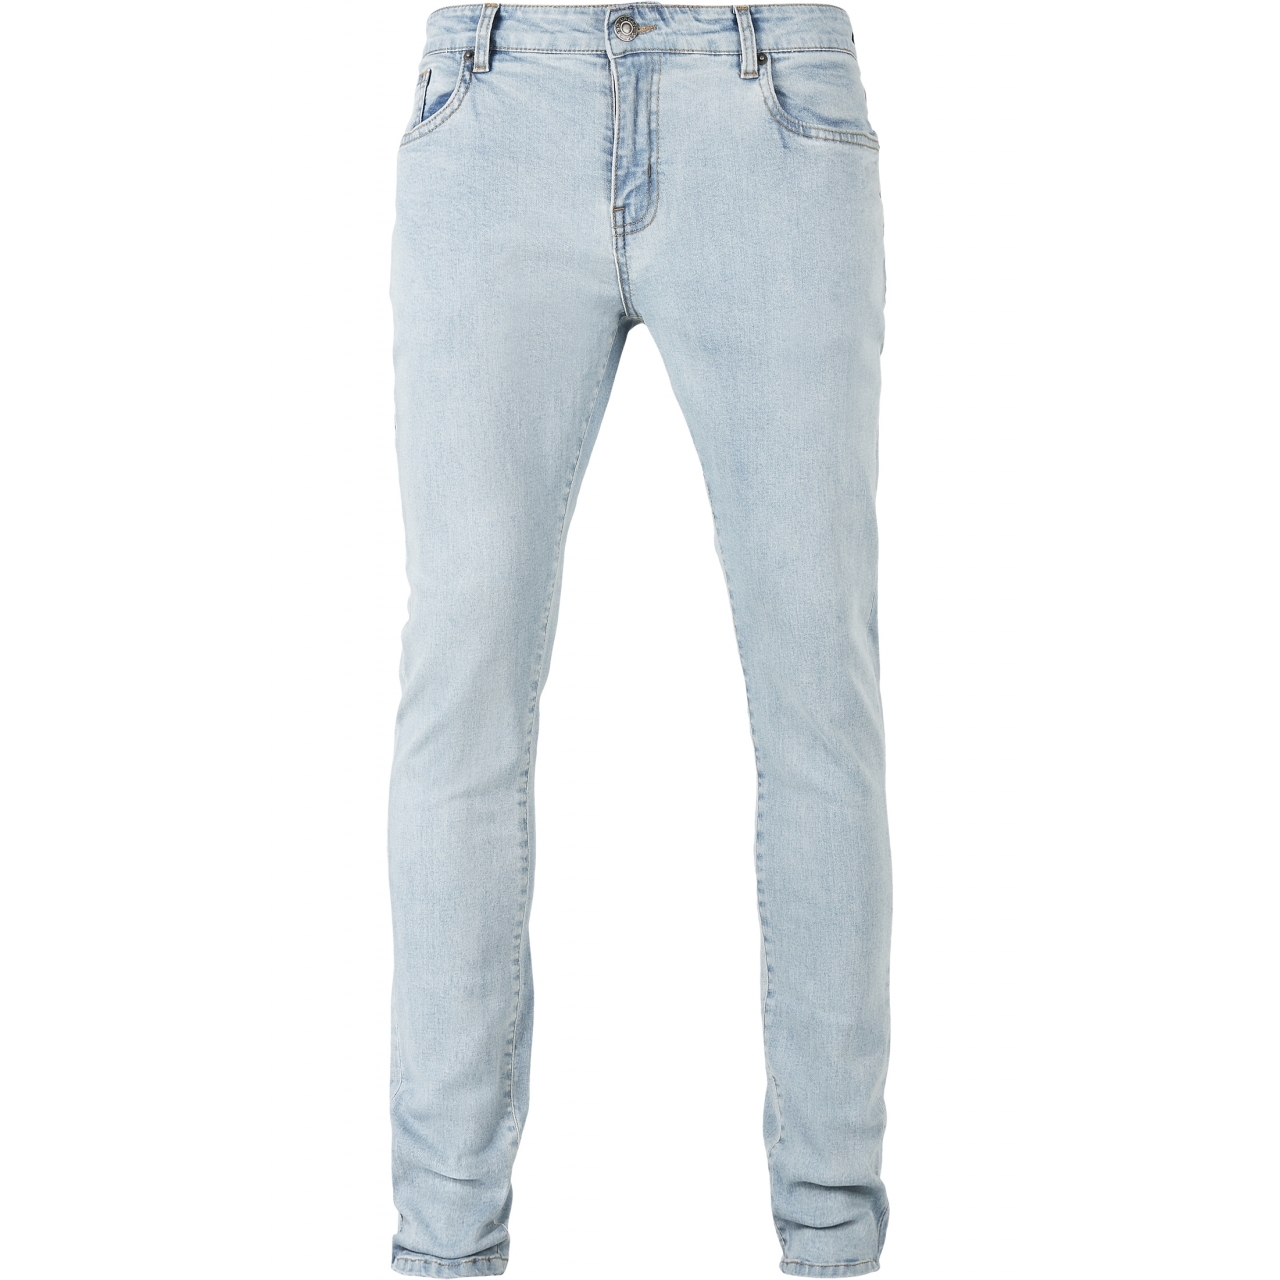 Džíny Urban Classics Slim Fit Zip Jeans - modré, 30/32